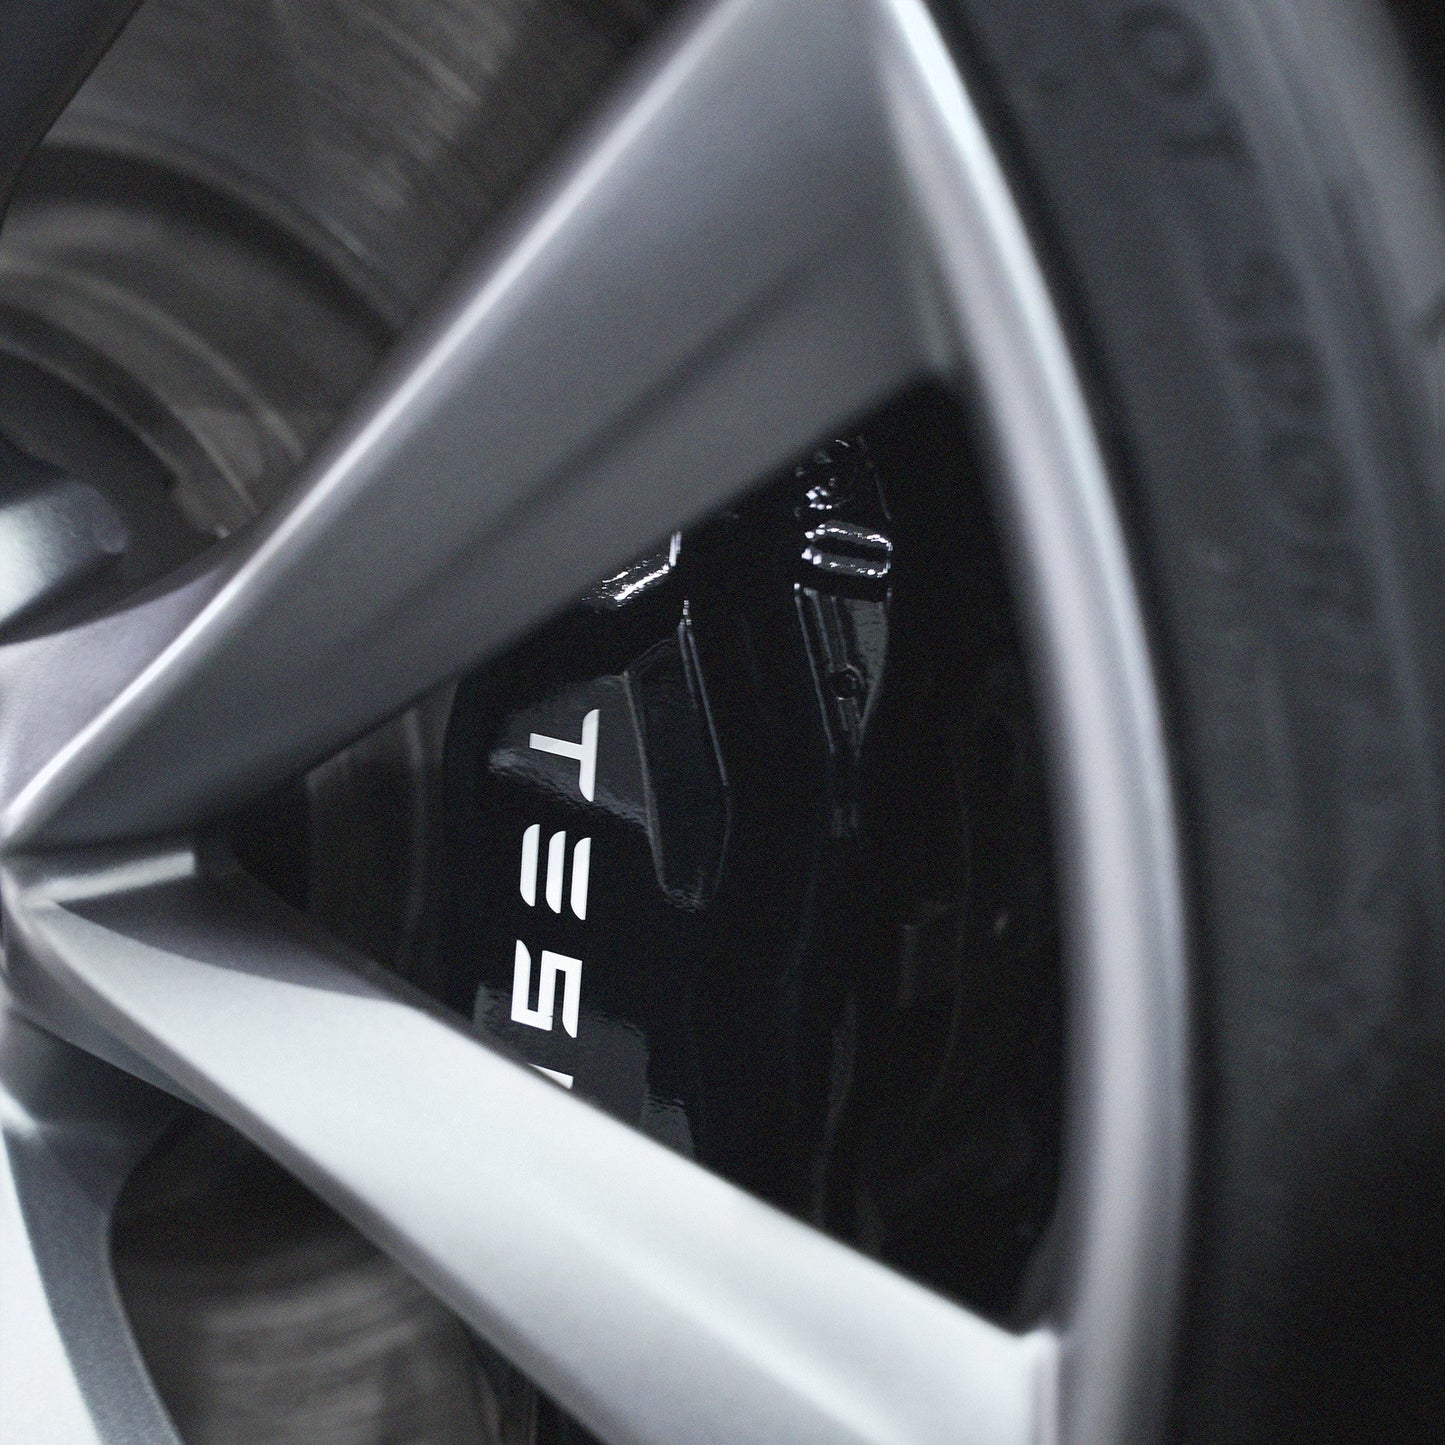 Tesla Model S Arachnid 4x 21" Alloy Wheels / Exchange